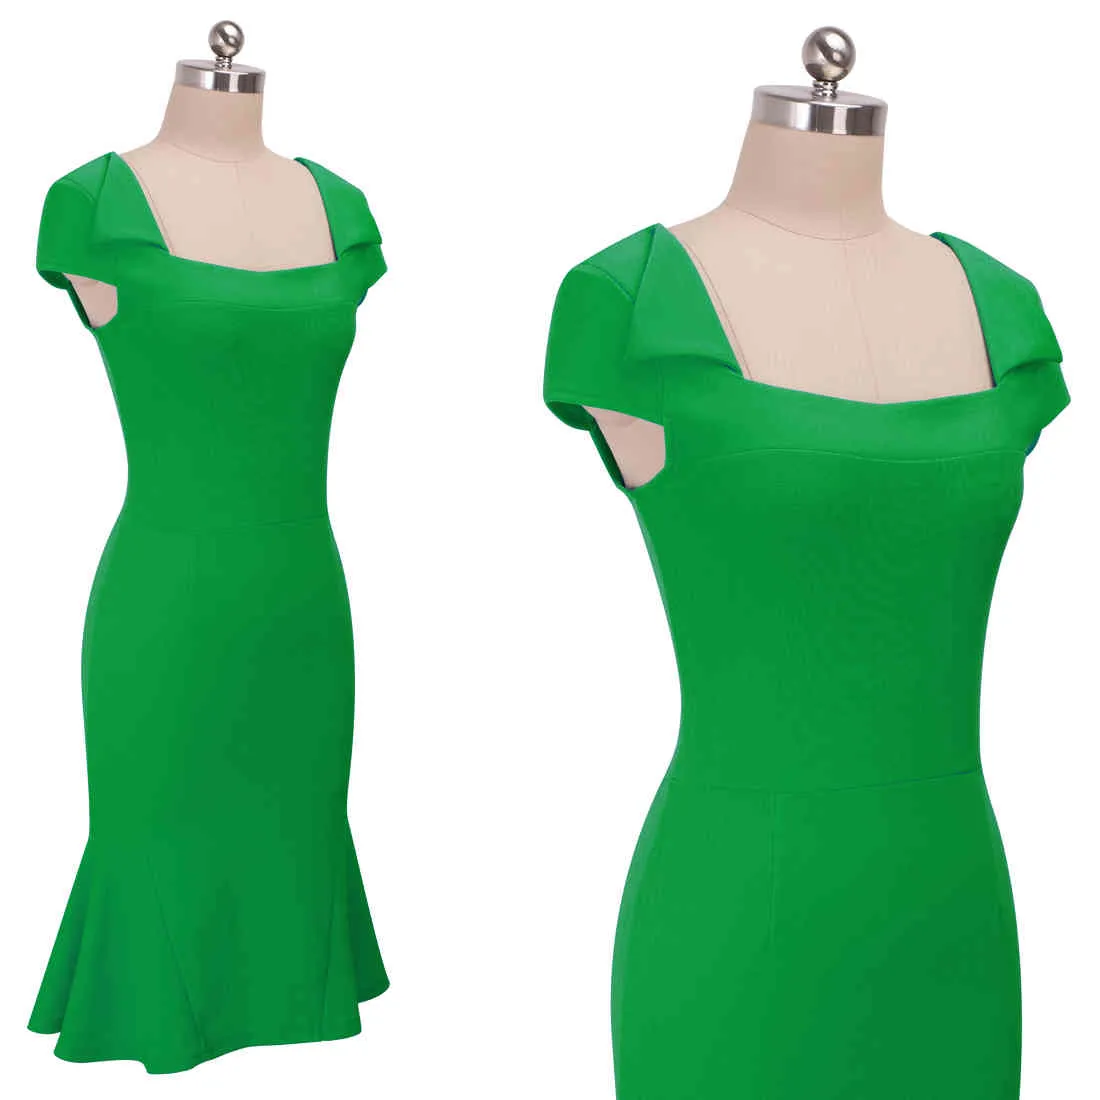 Nice-forever Sommer-Frauen-grüne Farbe Vintage-Sonnenkleider Business-Party, figurbetontes Meerjungfrau-Kleid bty455 210419